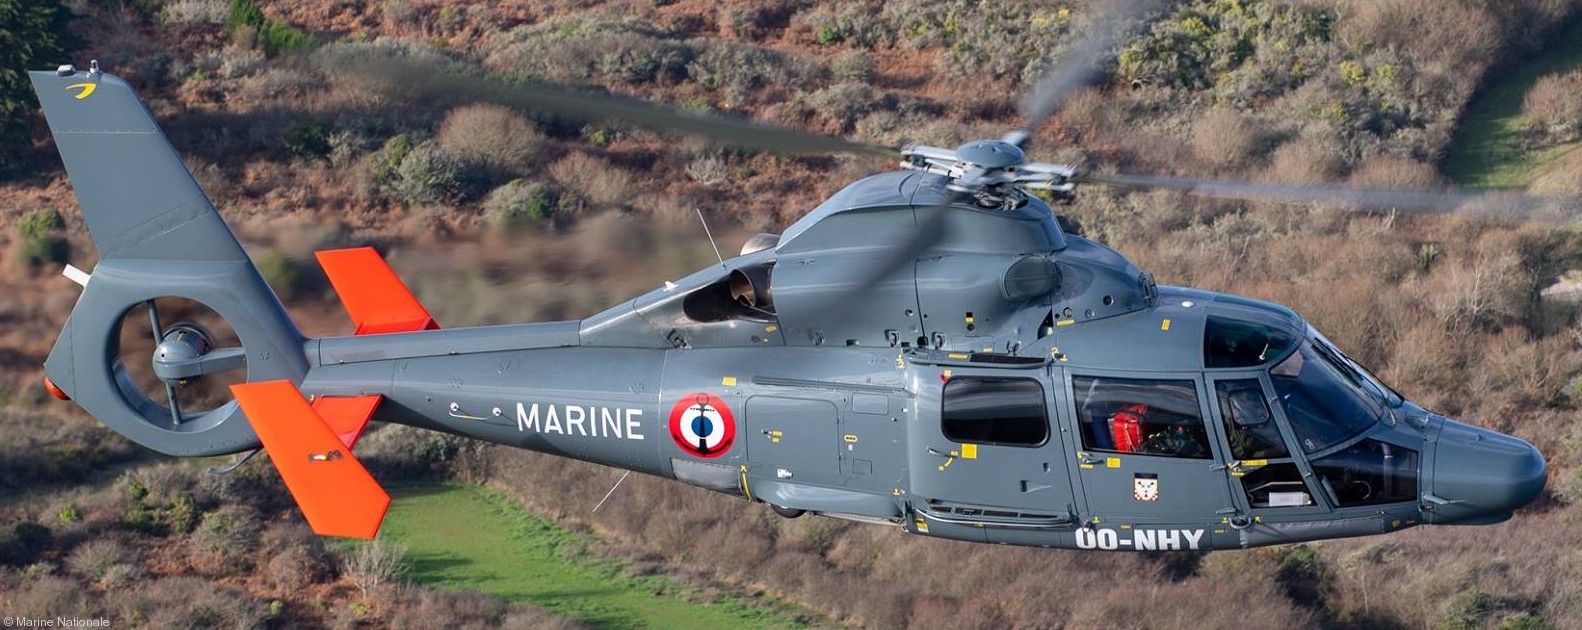 as365 dauphin helicopter french navy marine nationale aeronavale flottille 09